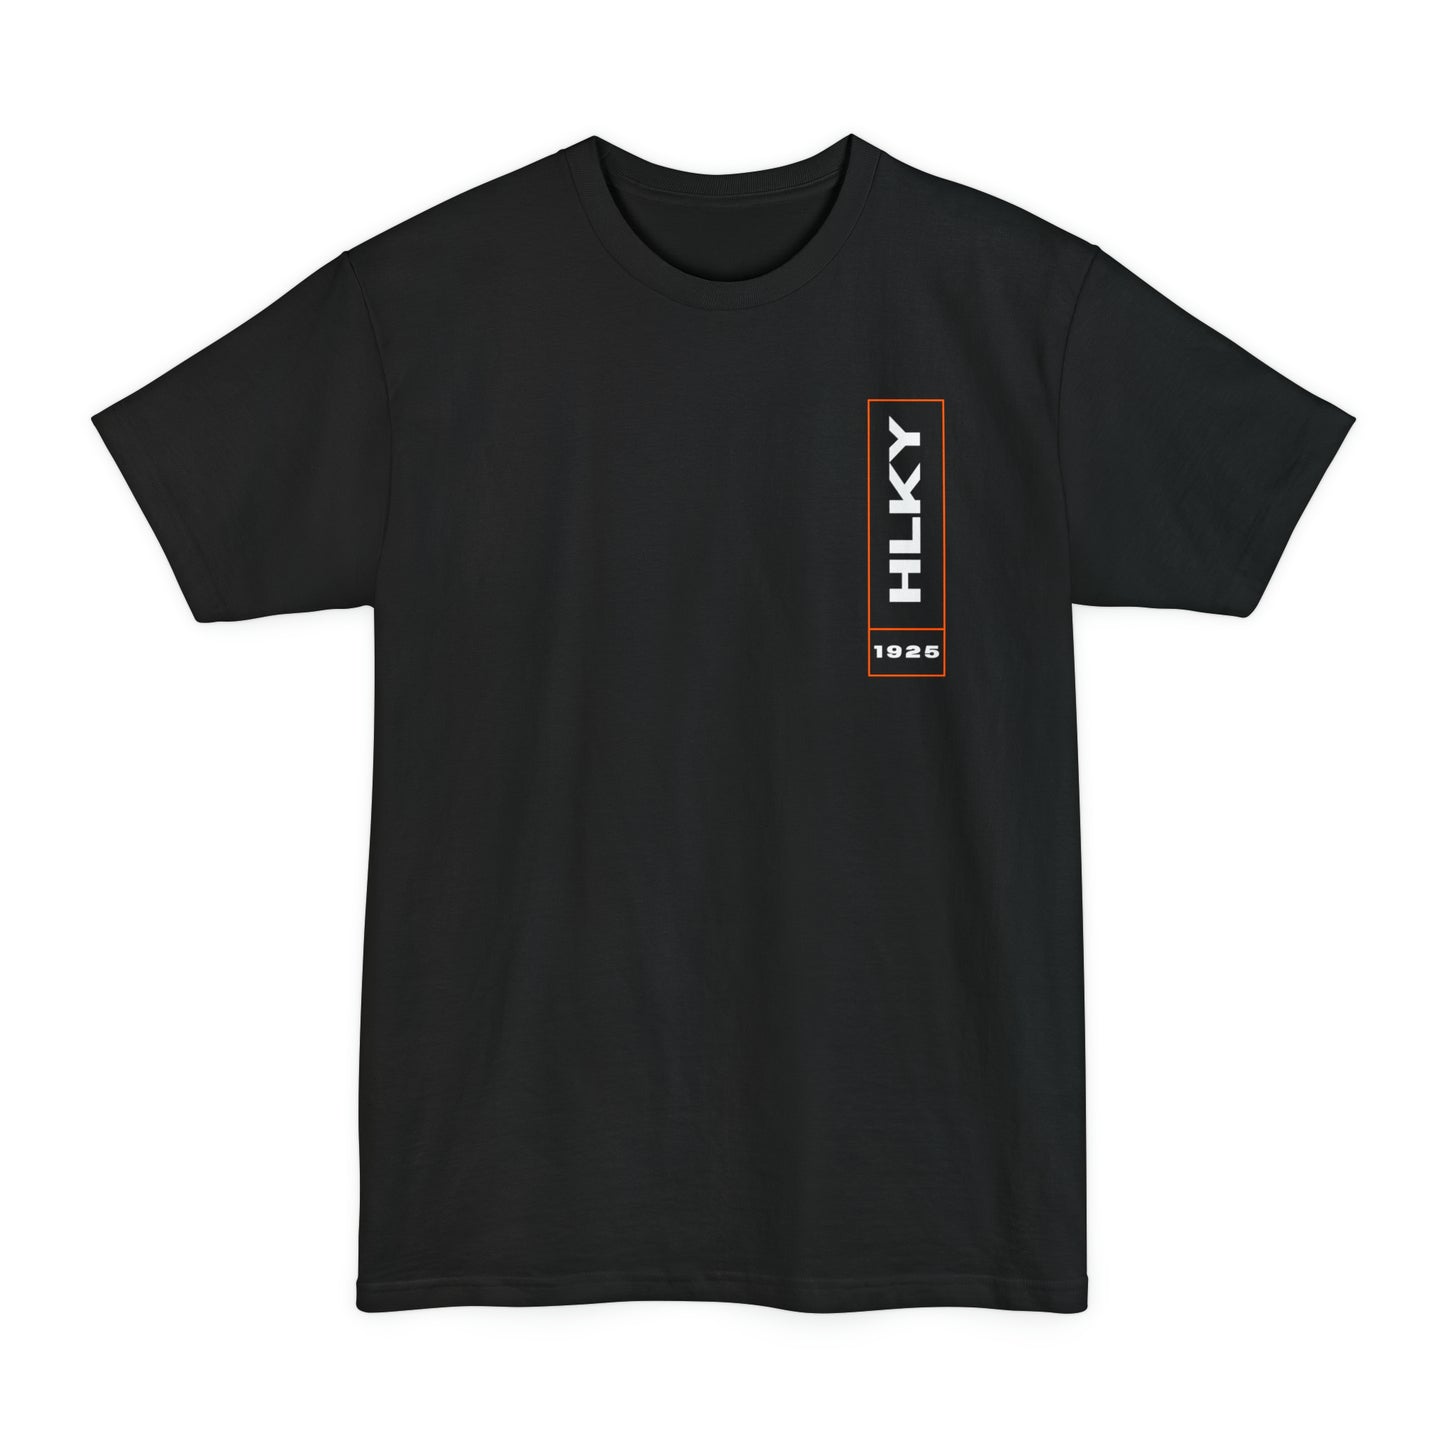 Herrington Lake "Sleek" Tall Hanes Beefy-T® T-Shirt